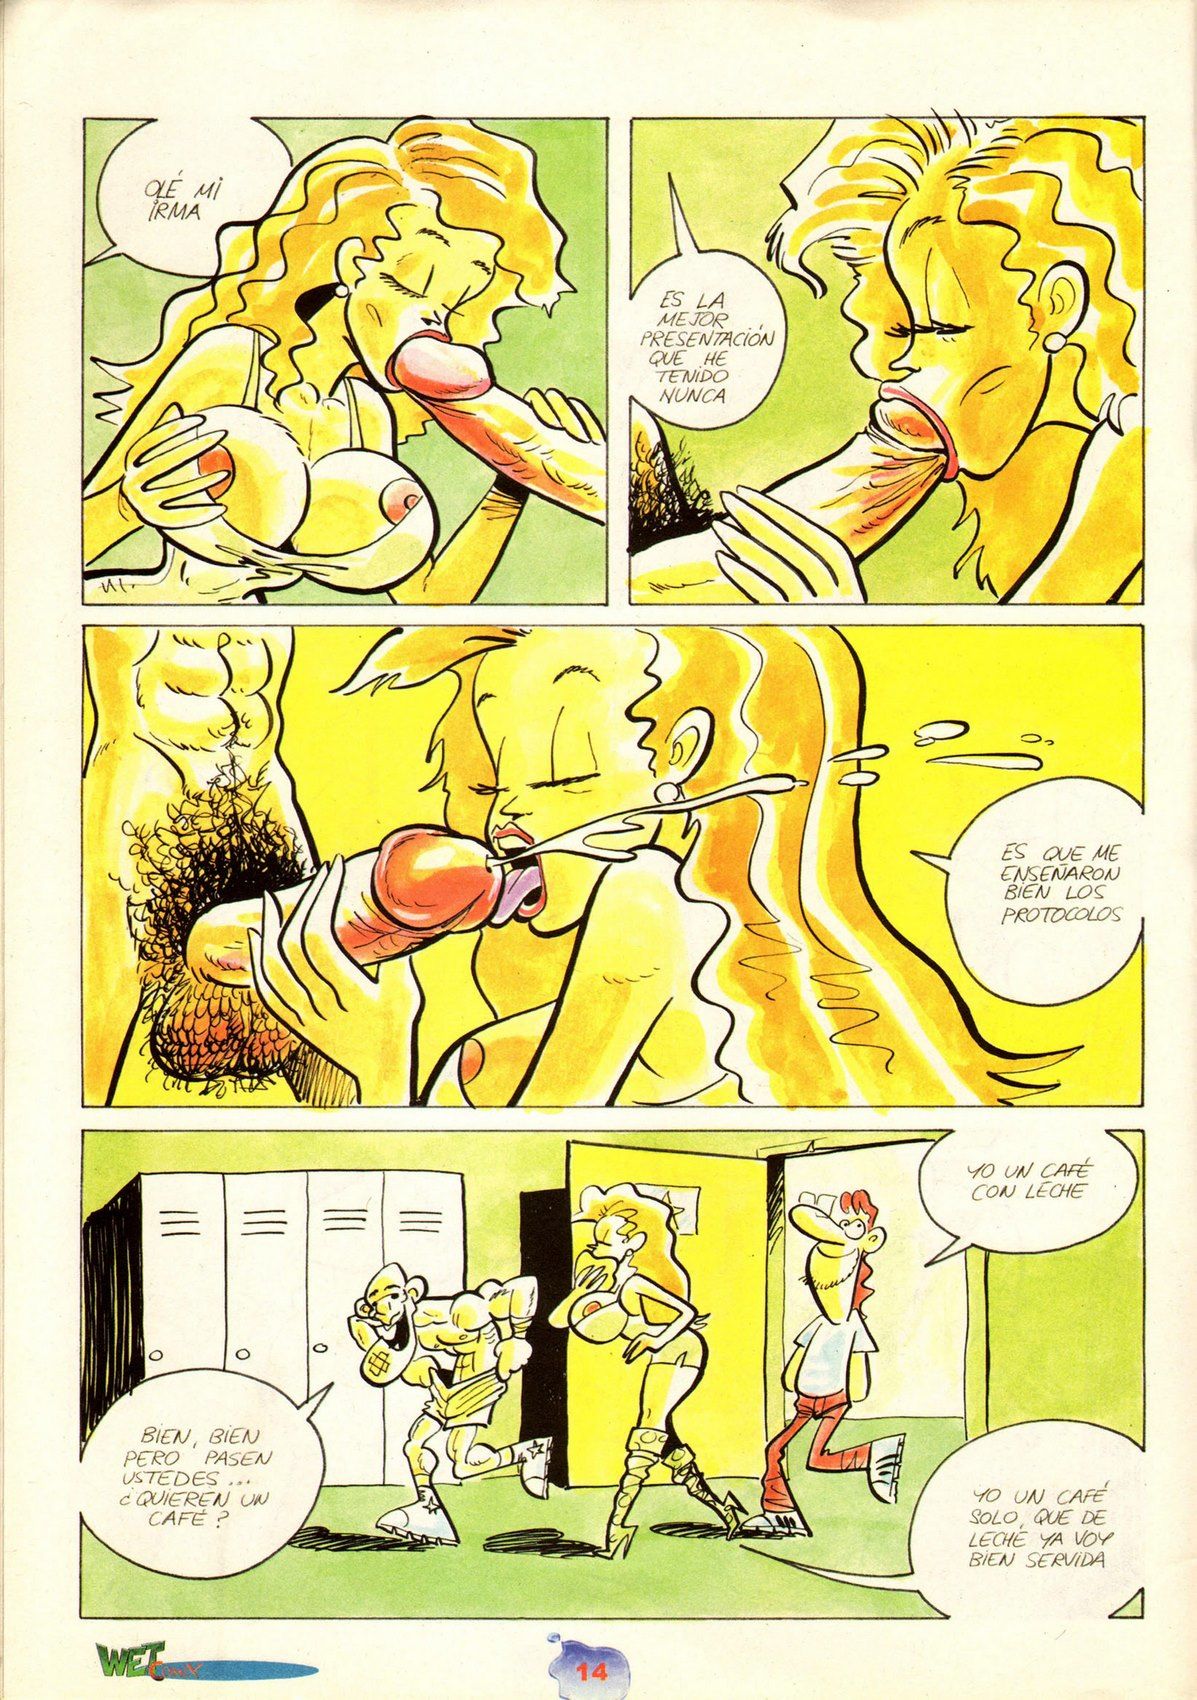 Wet Comix No.7 by Alb Luzroja (Westen Erotic) page 14